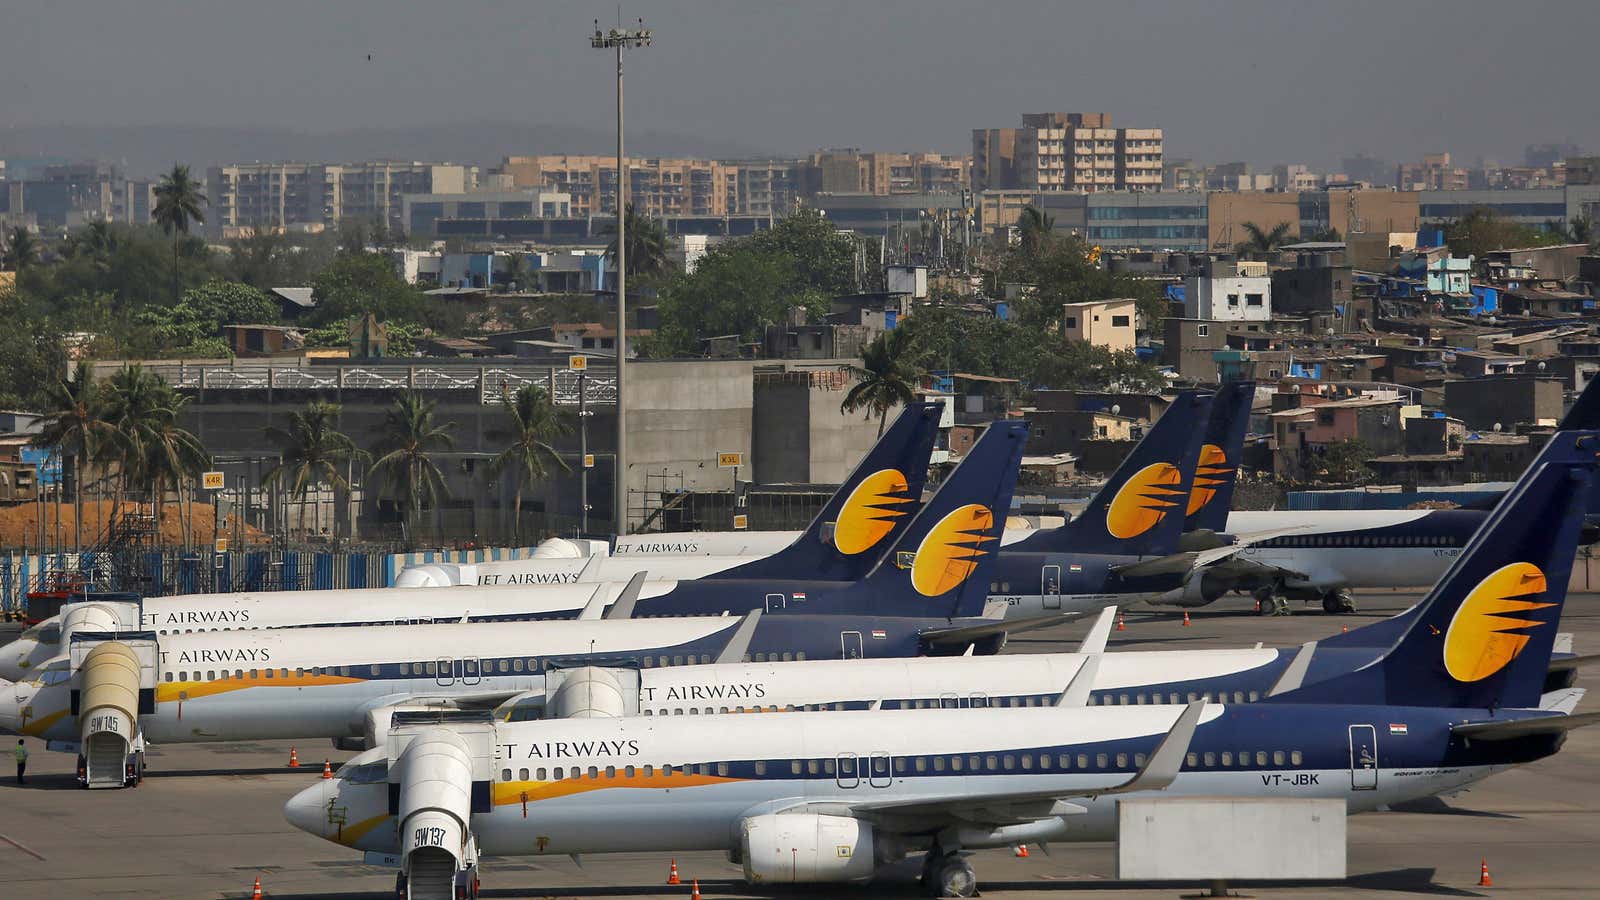 Jet Airways aircrafts are seen parked as an IndiGo Airlines aircraft prepares to land at the Chhatrapati Shivaji Maharaj International Airport in Mumbai, India, April 18, 2019. REUTERS/Francis Mascarenhas